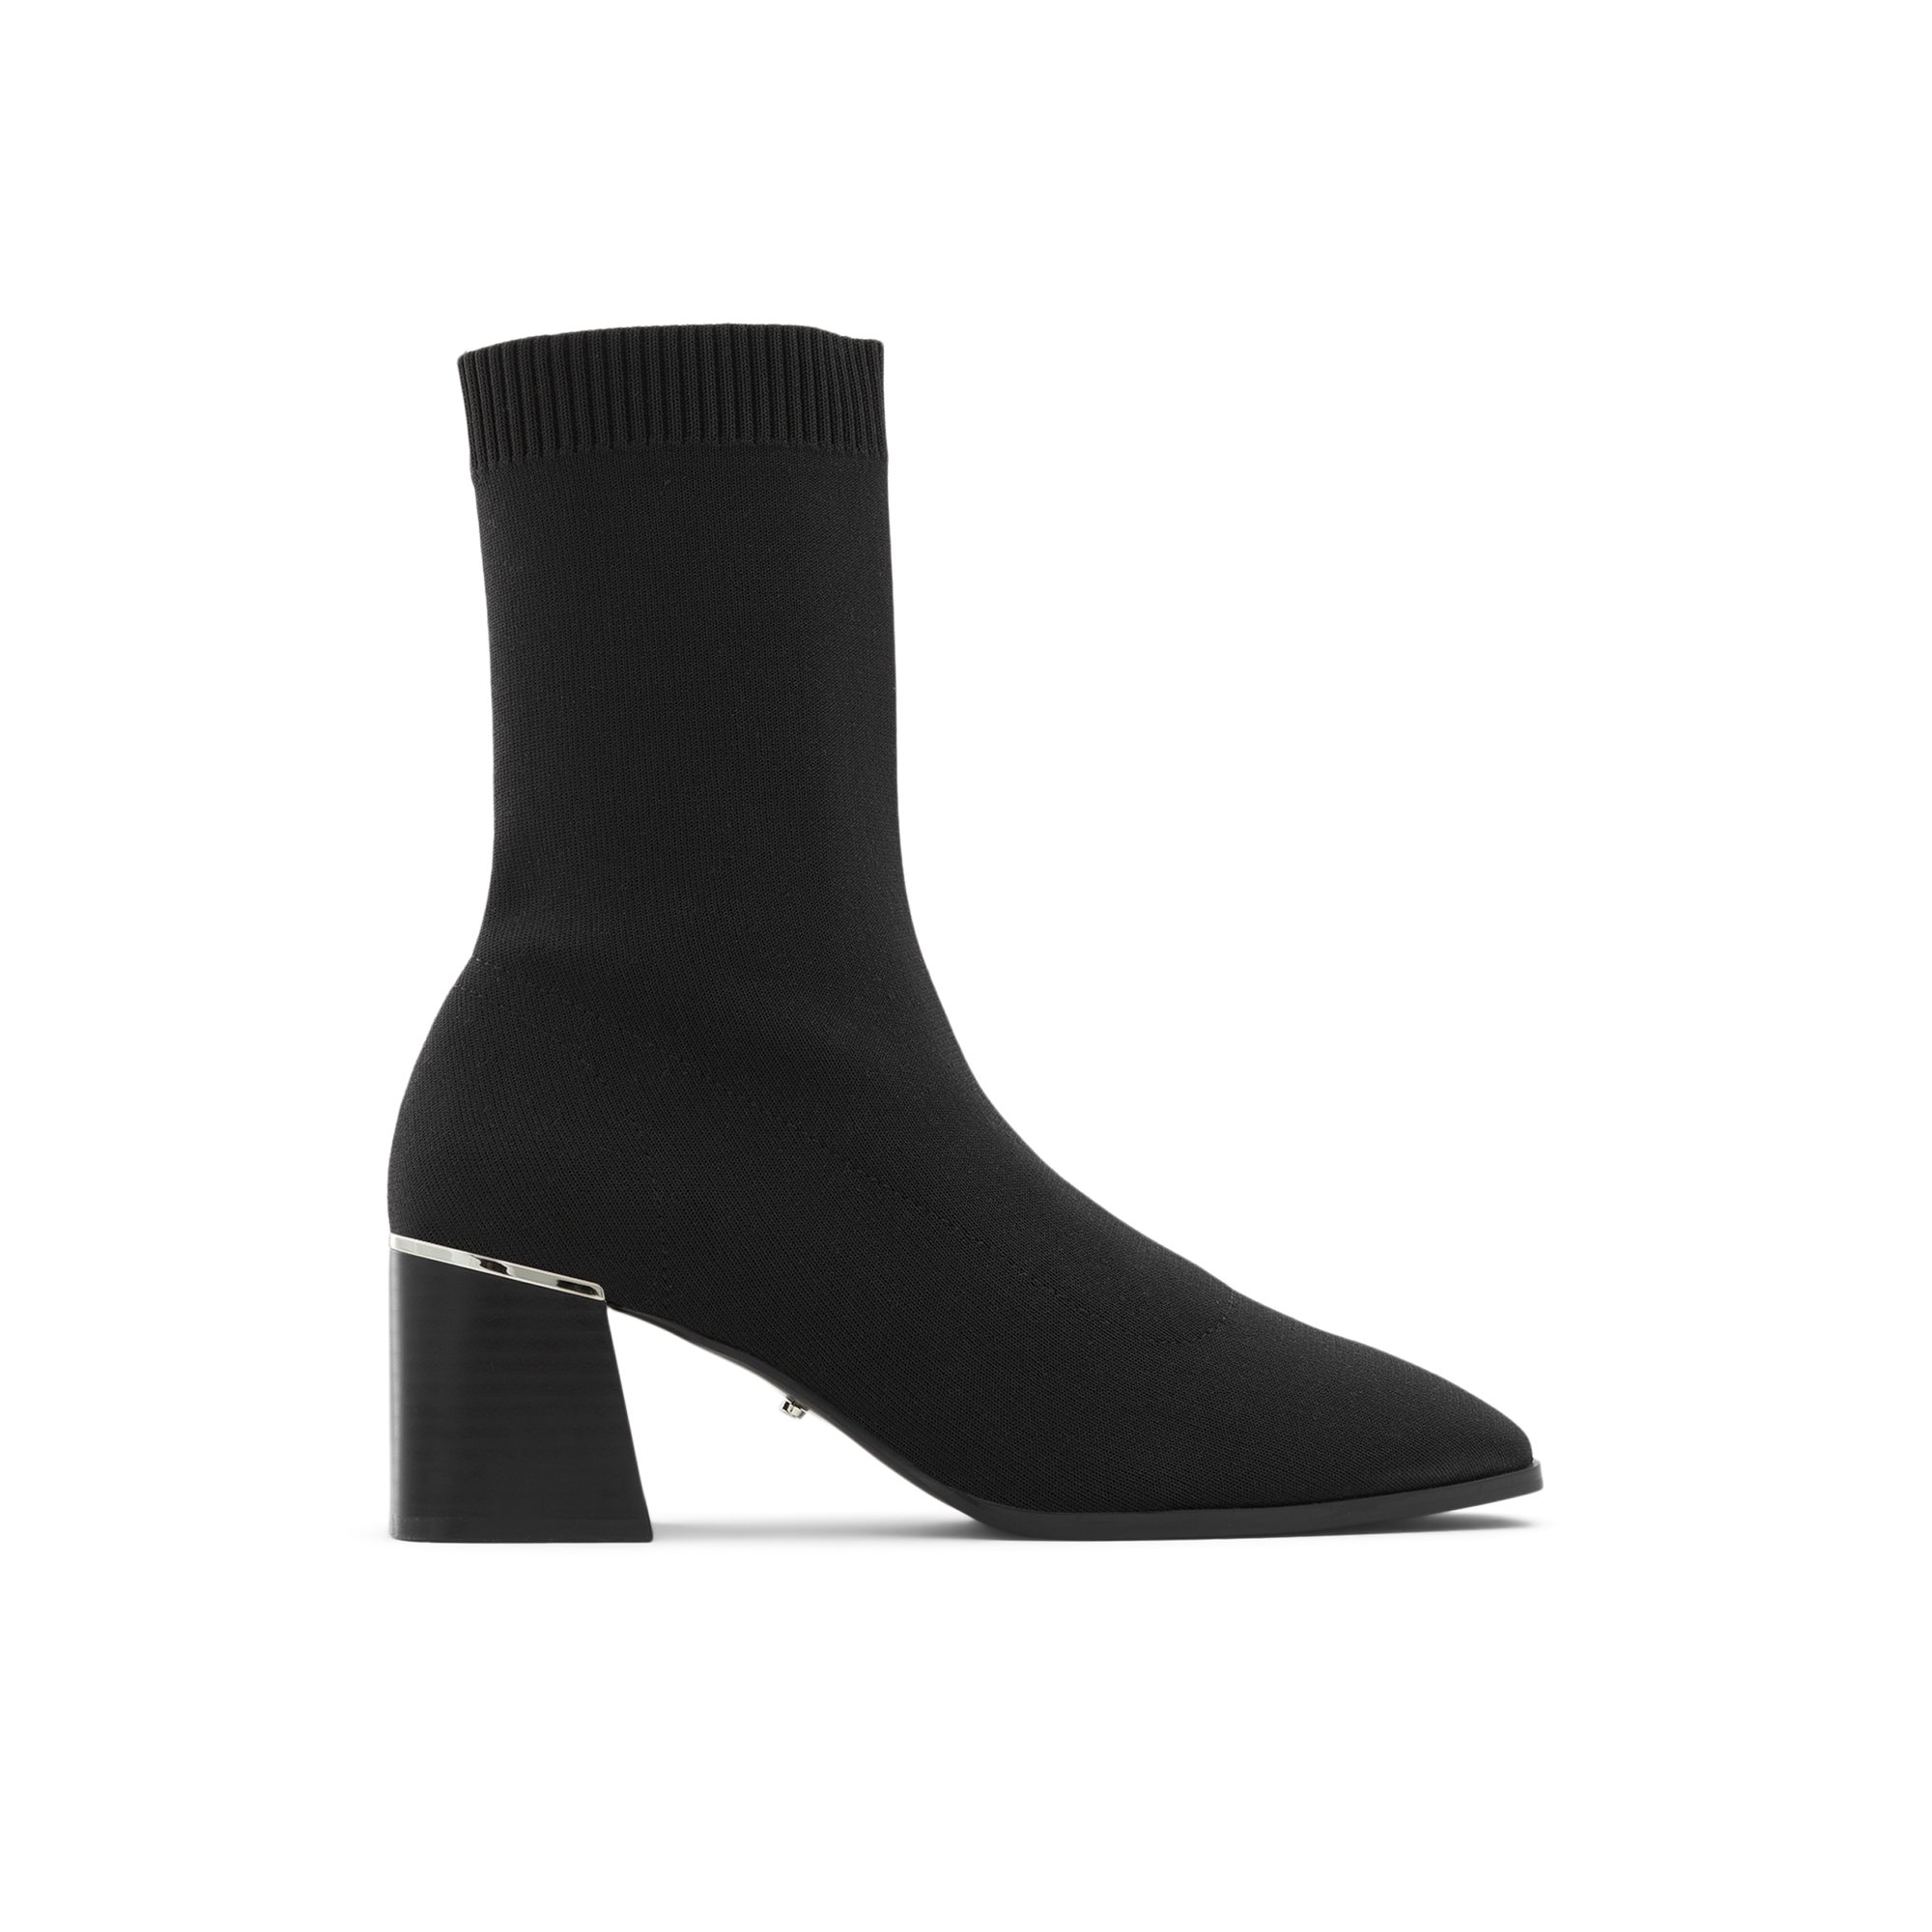 ALDO Larrgodia - Women's Casual Boot - Black